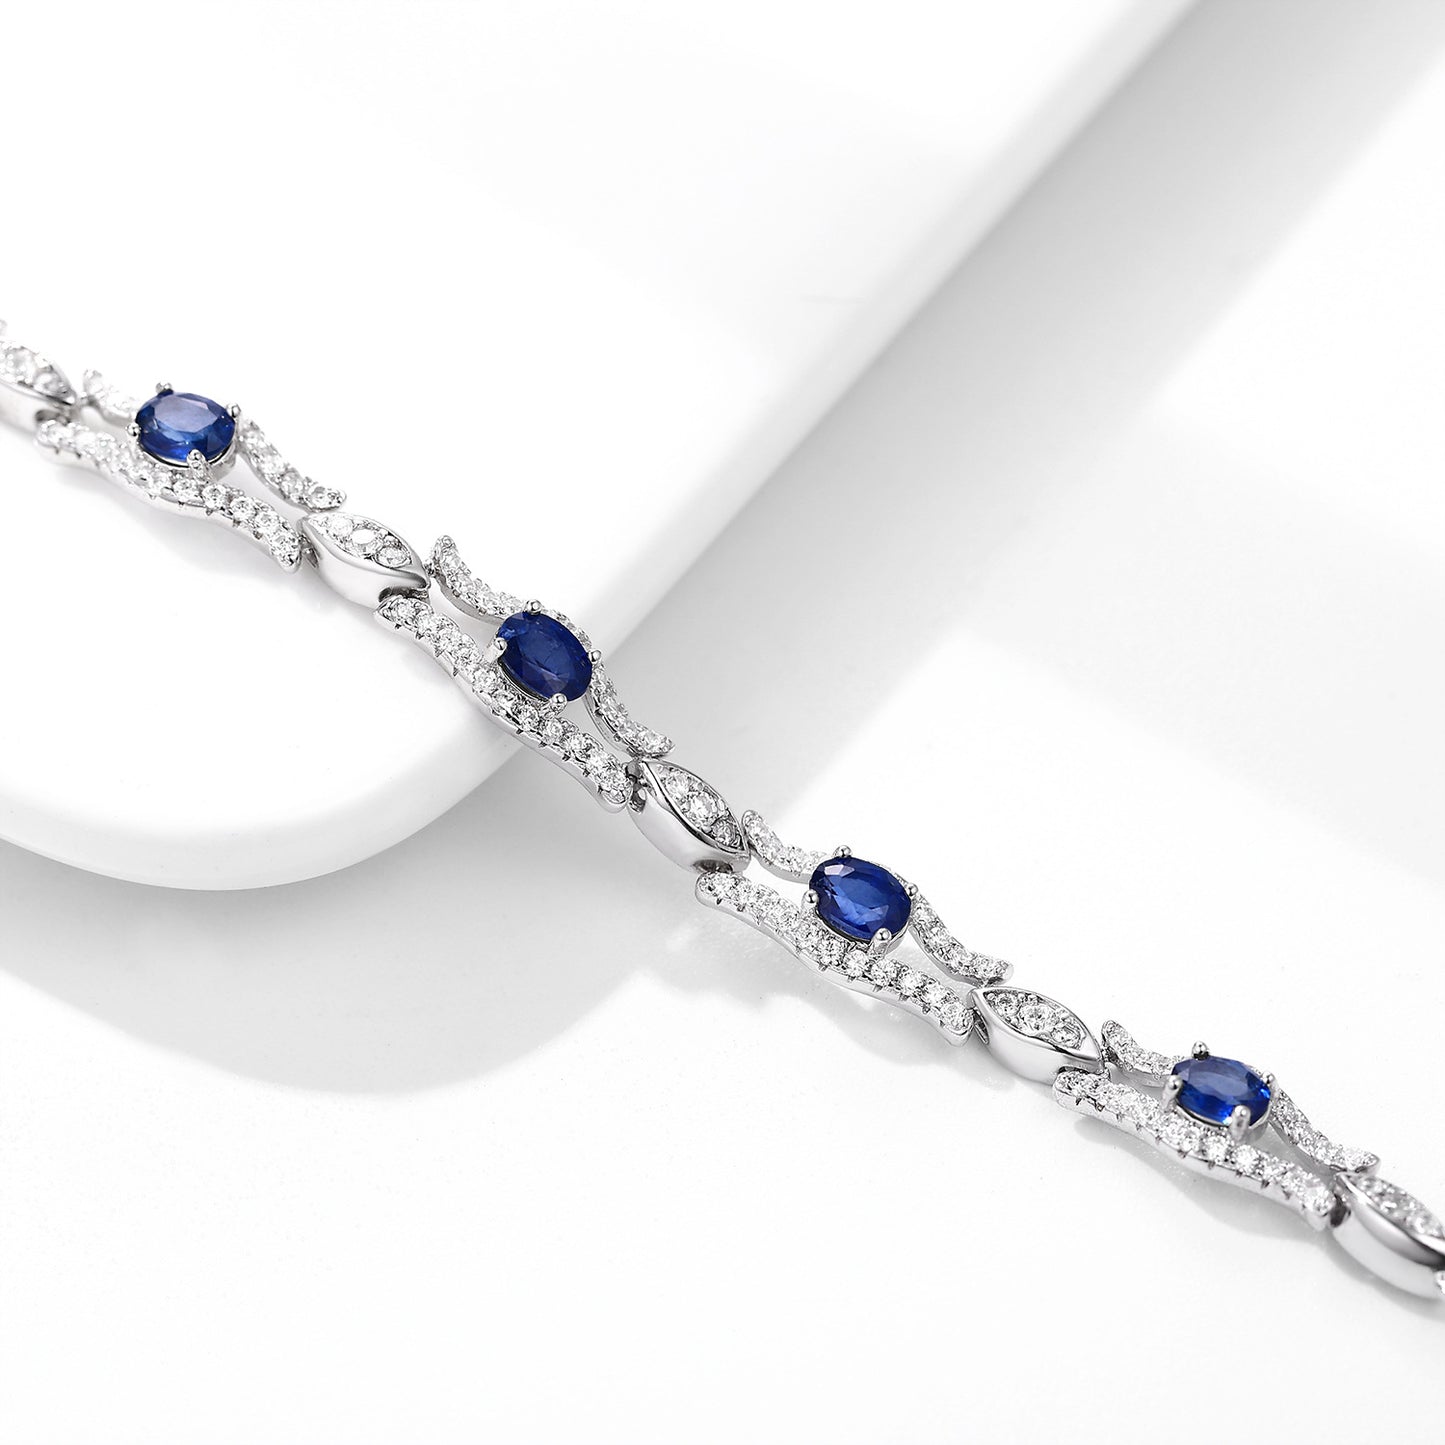 Natural Sapphire Bracelet Women's S925 Silver Set Gem Jewelry Premium Original Design Jewelry